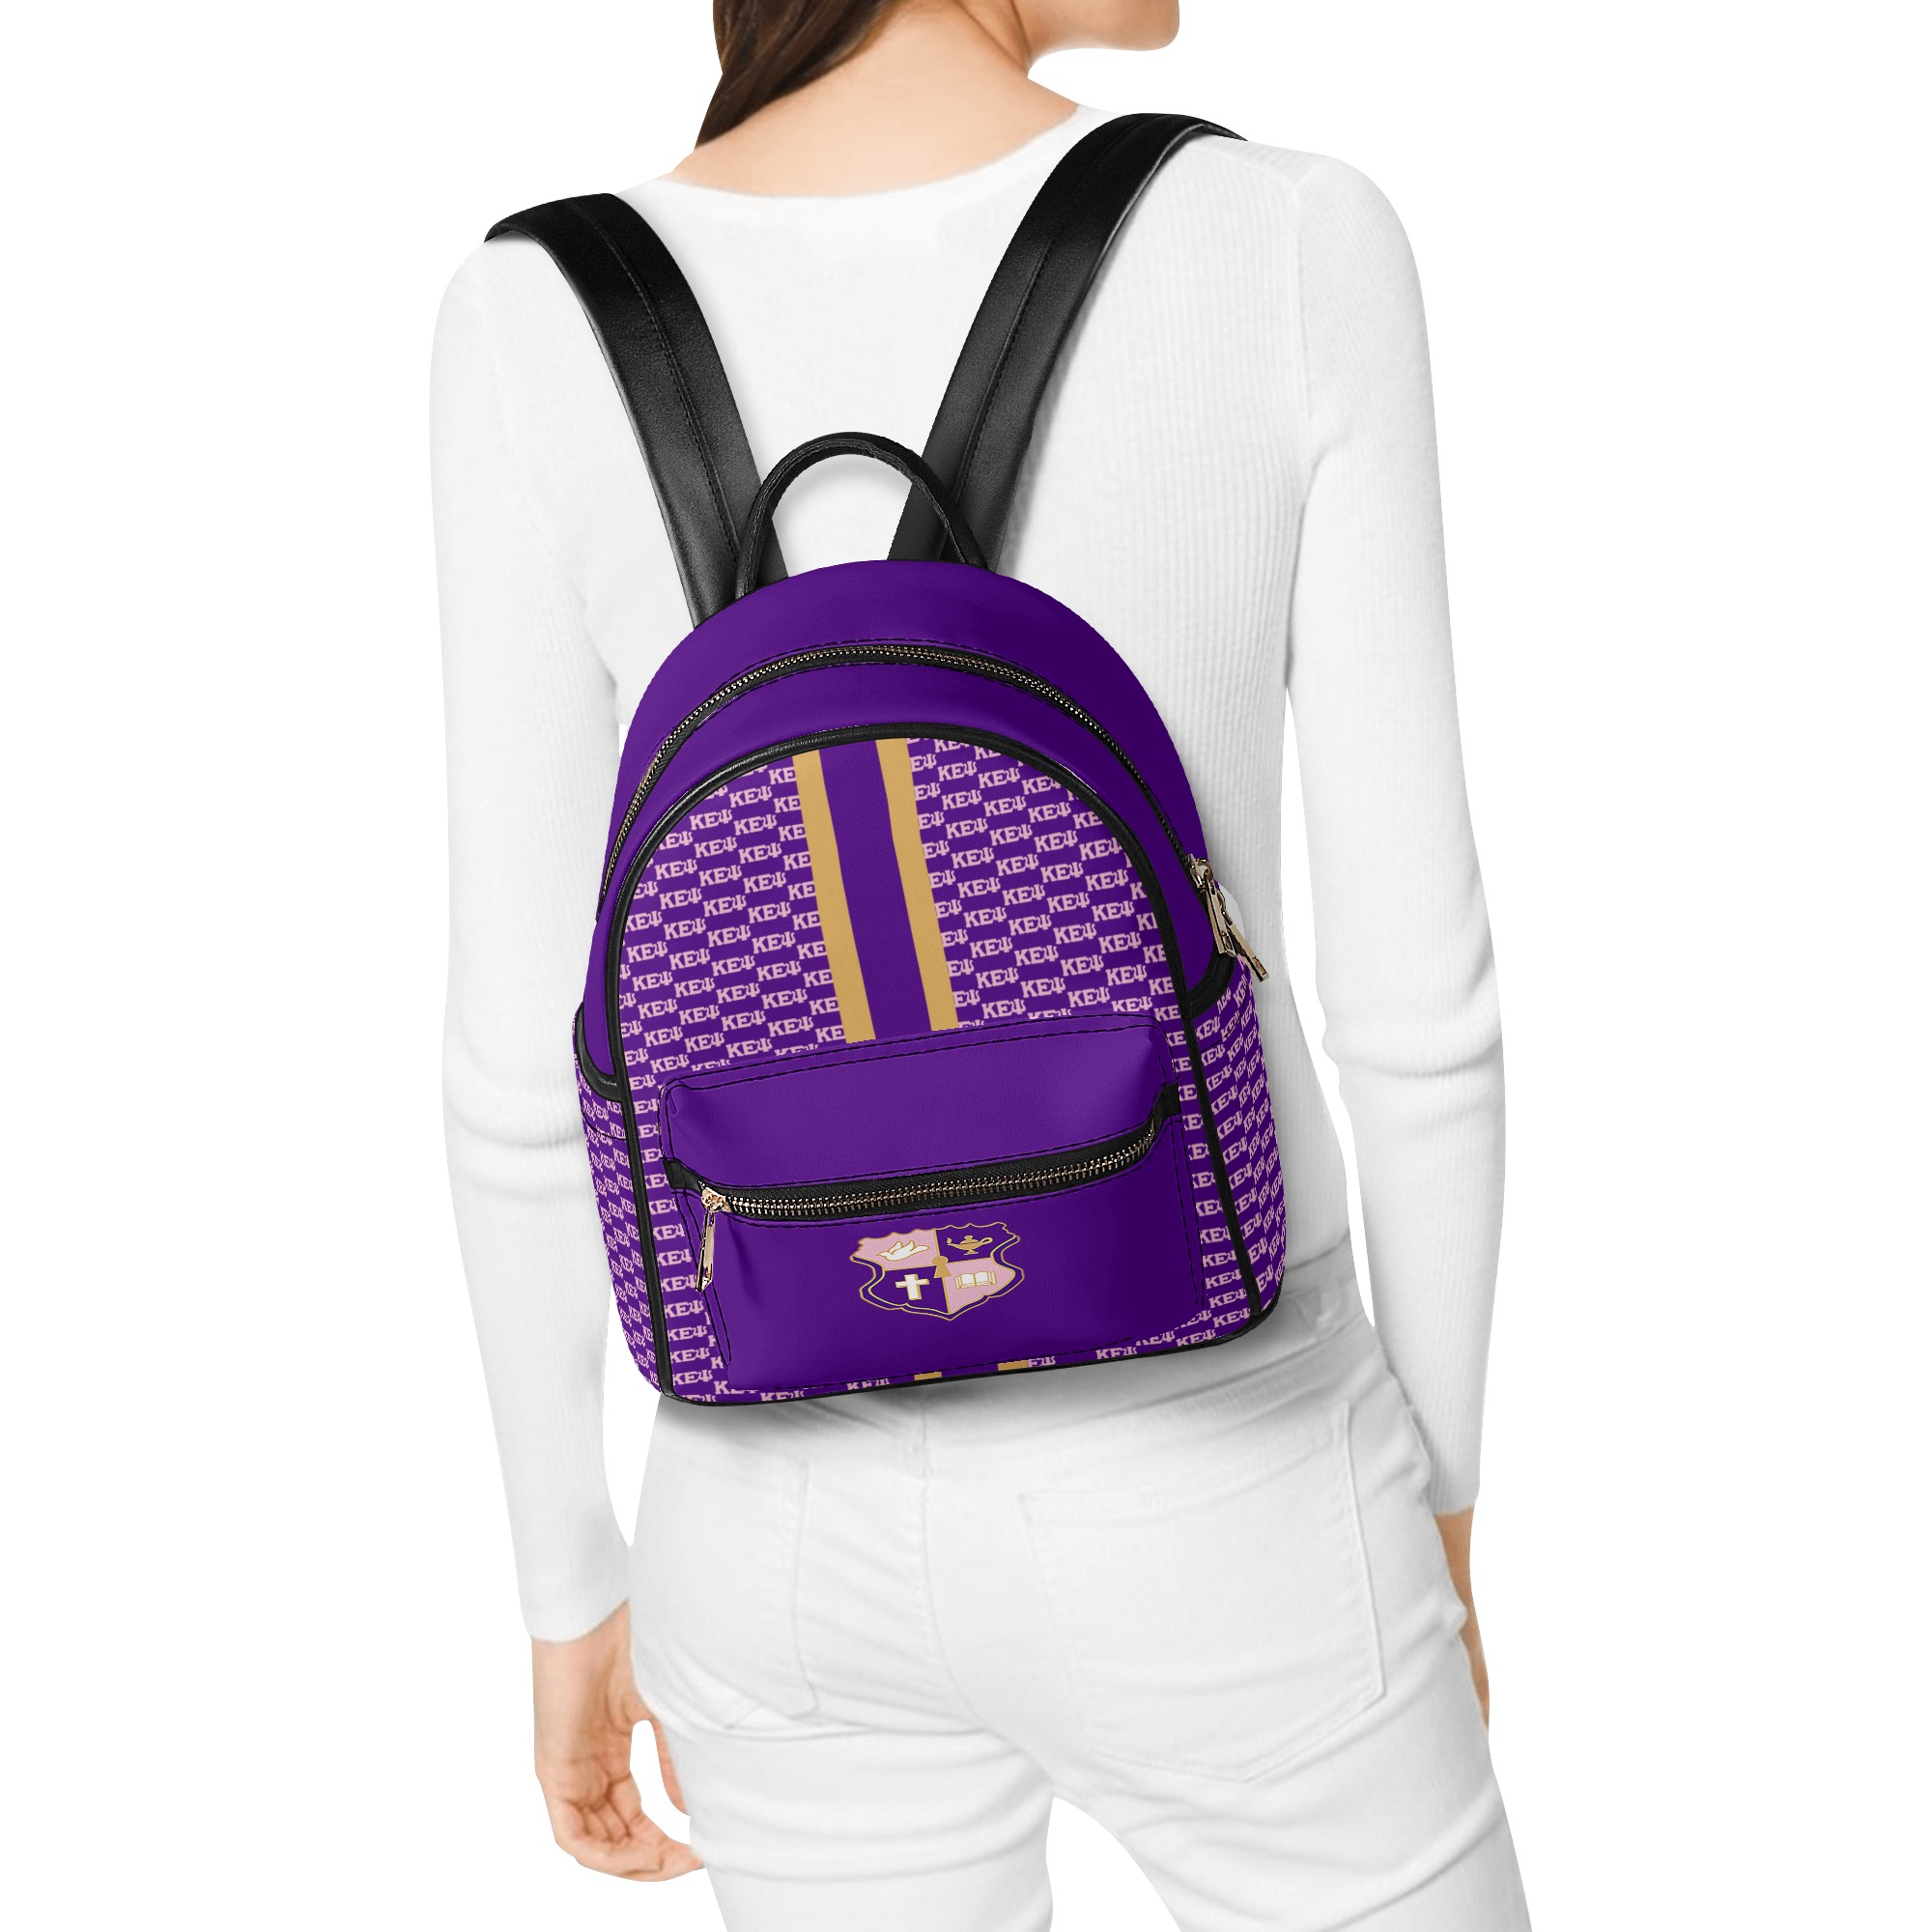 Woman wearing a purple designer backpack.